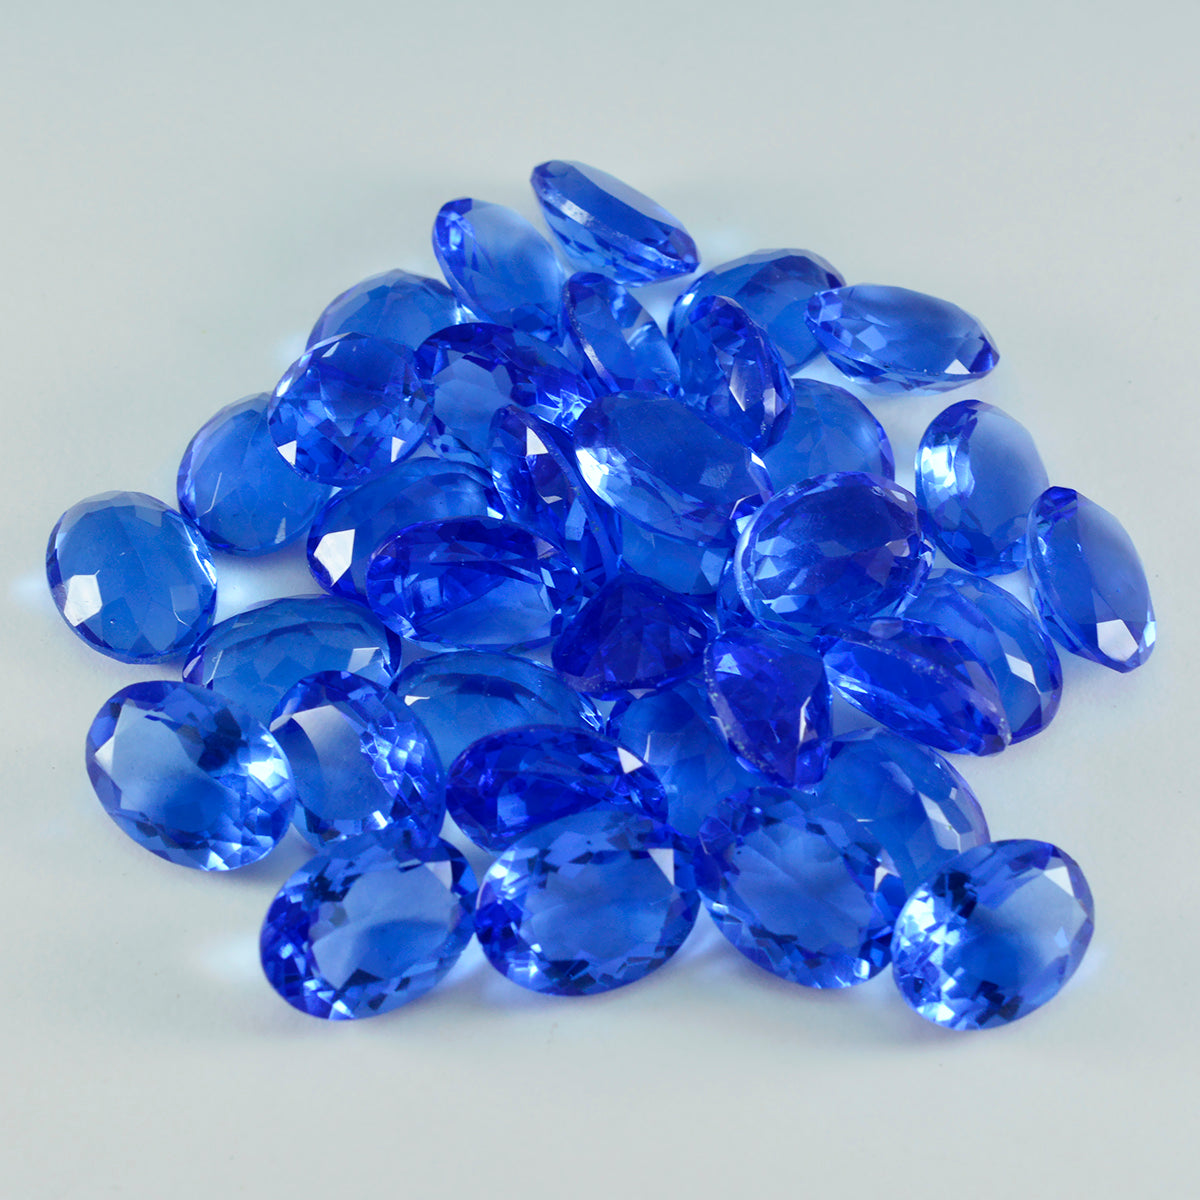 Riyogems 1PC Blue Sapphire CZ Faceted 9x11 mm Oval Shape Nice Quality Gemstone